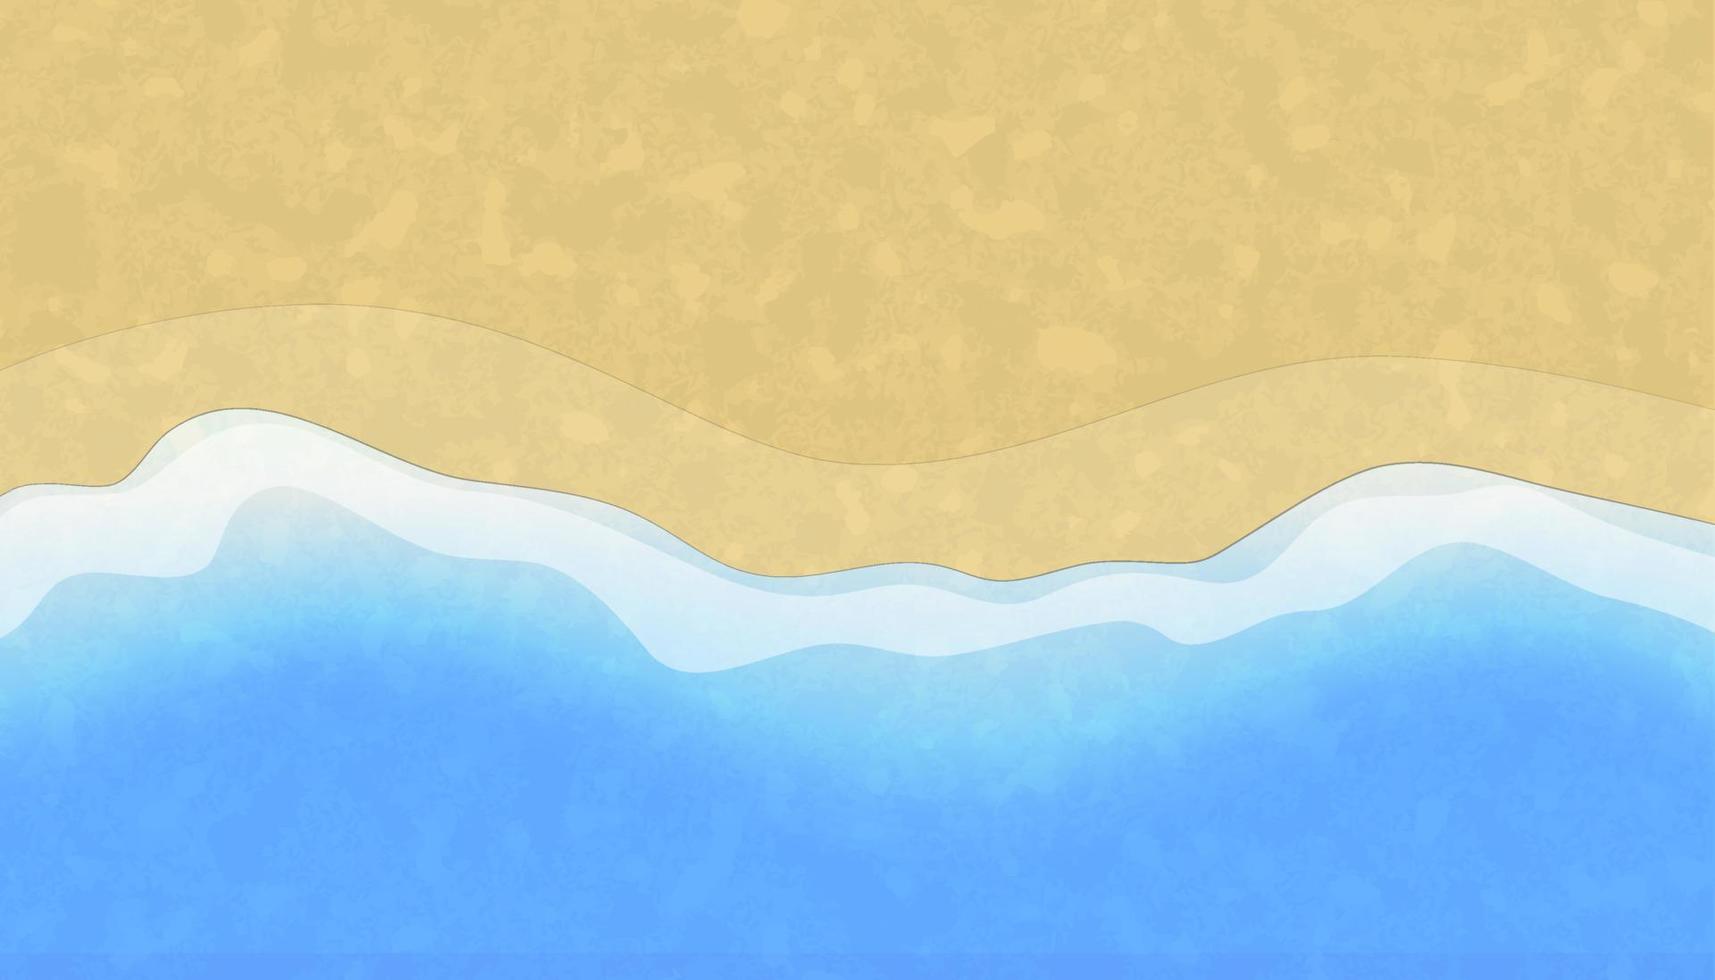 zomer vakantie achtergrond. geel zand en blauwe golven. vector